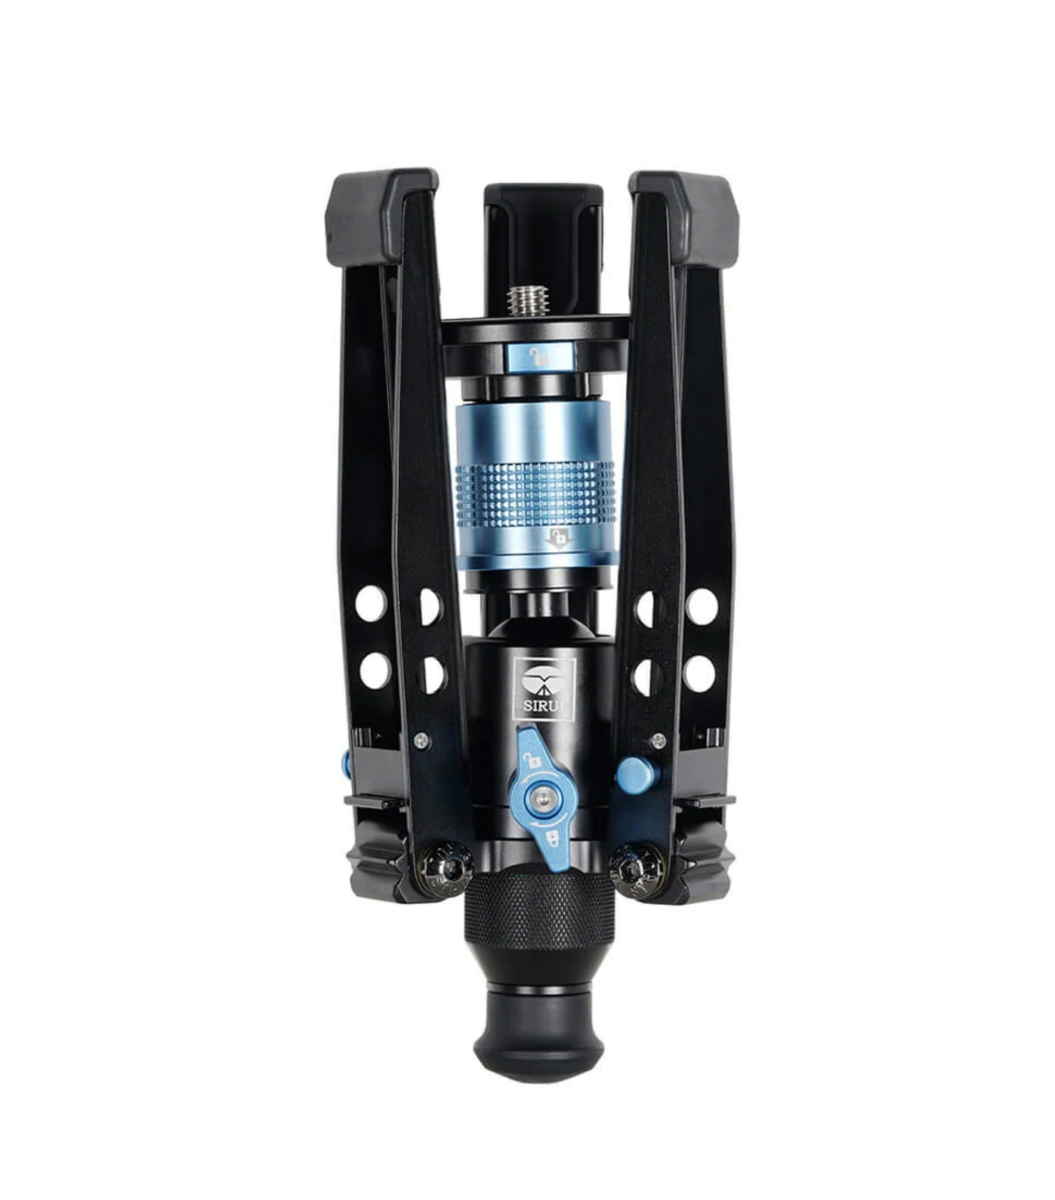 SIRUI P-325FS Camera Monopod, 55.1” Lightweight Carbon Fiber Photo Video Monopod, 5-Section Telescopic Monopod with Feet